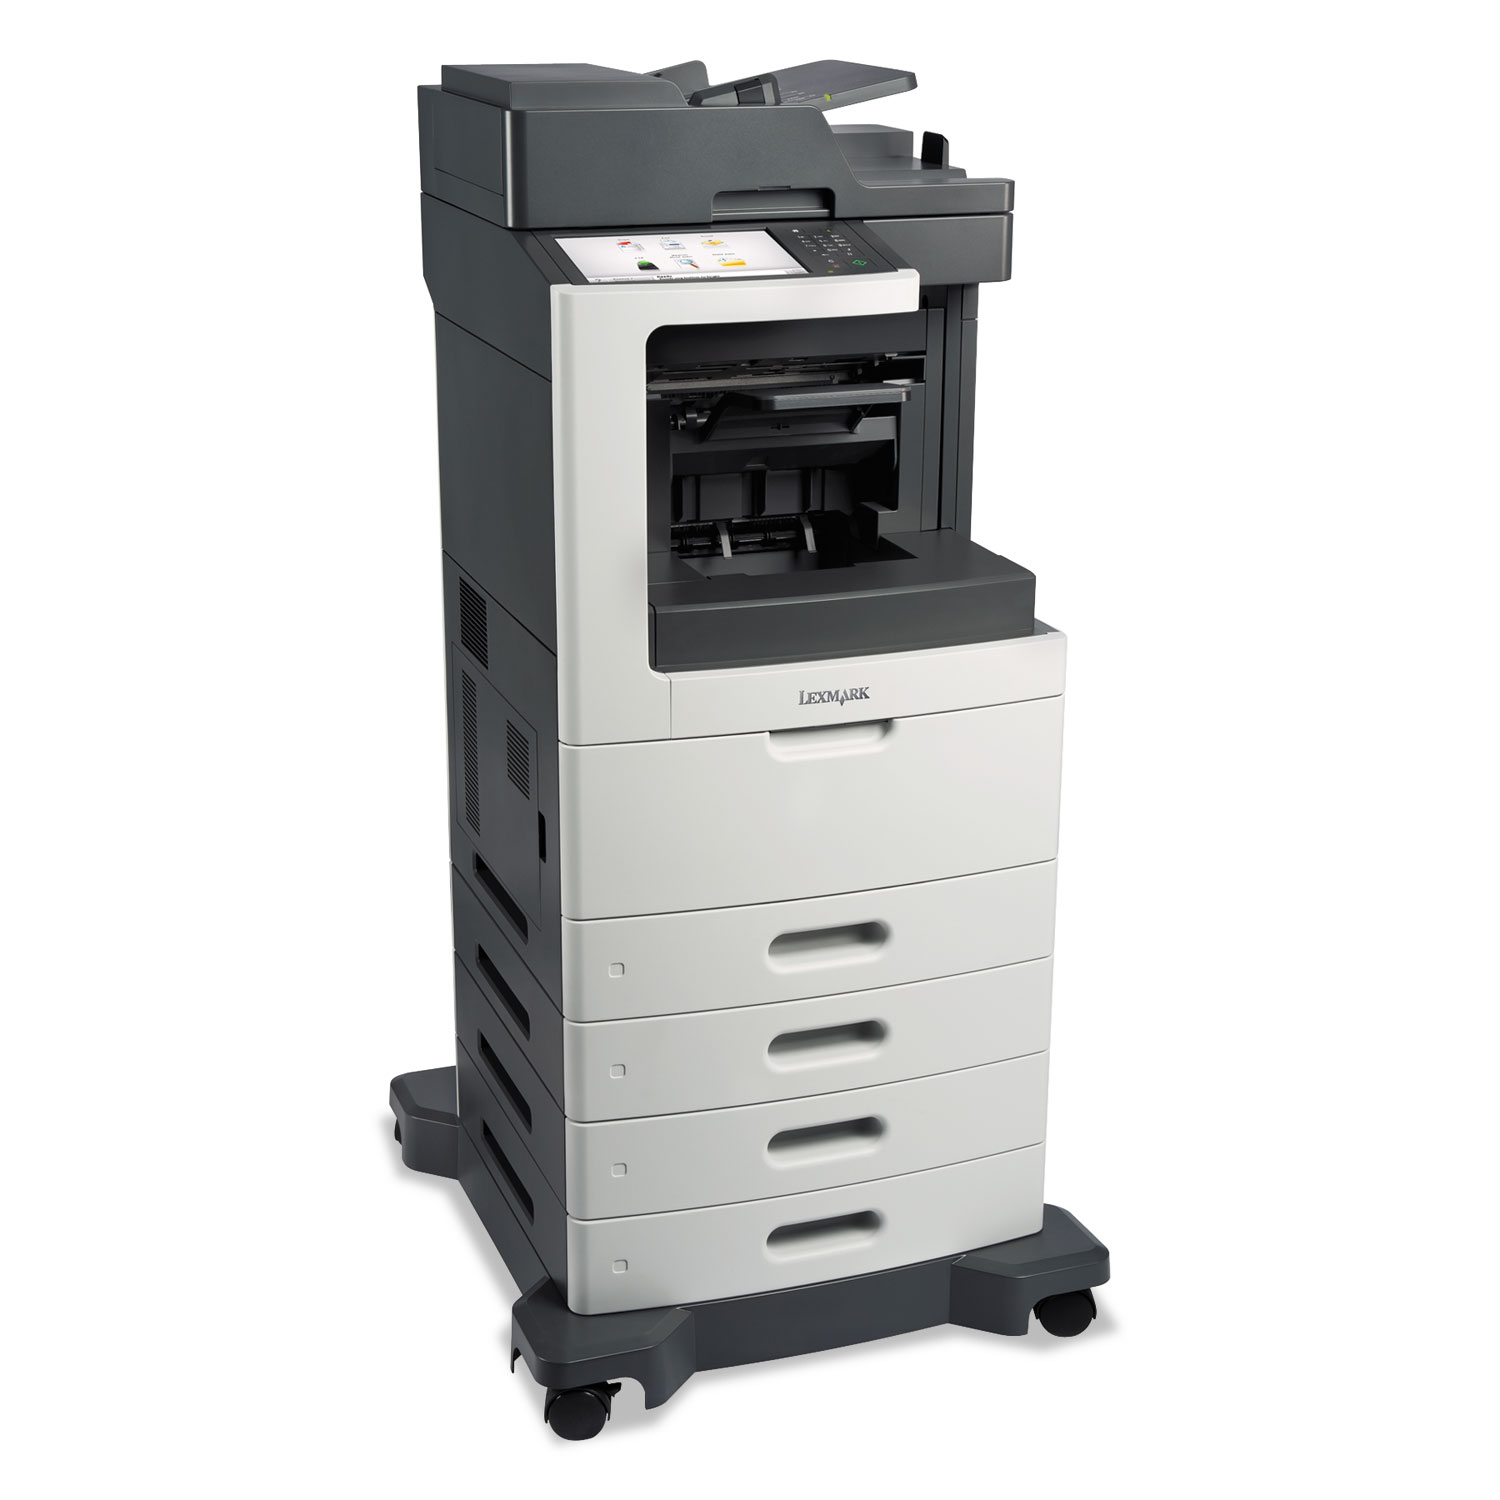 MX812de Multifunction Laser Printer, Copy/Fax/Print/Scan